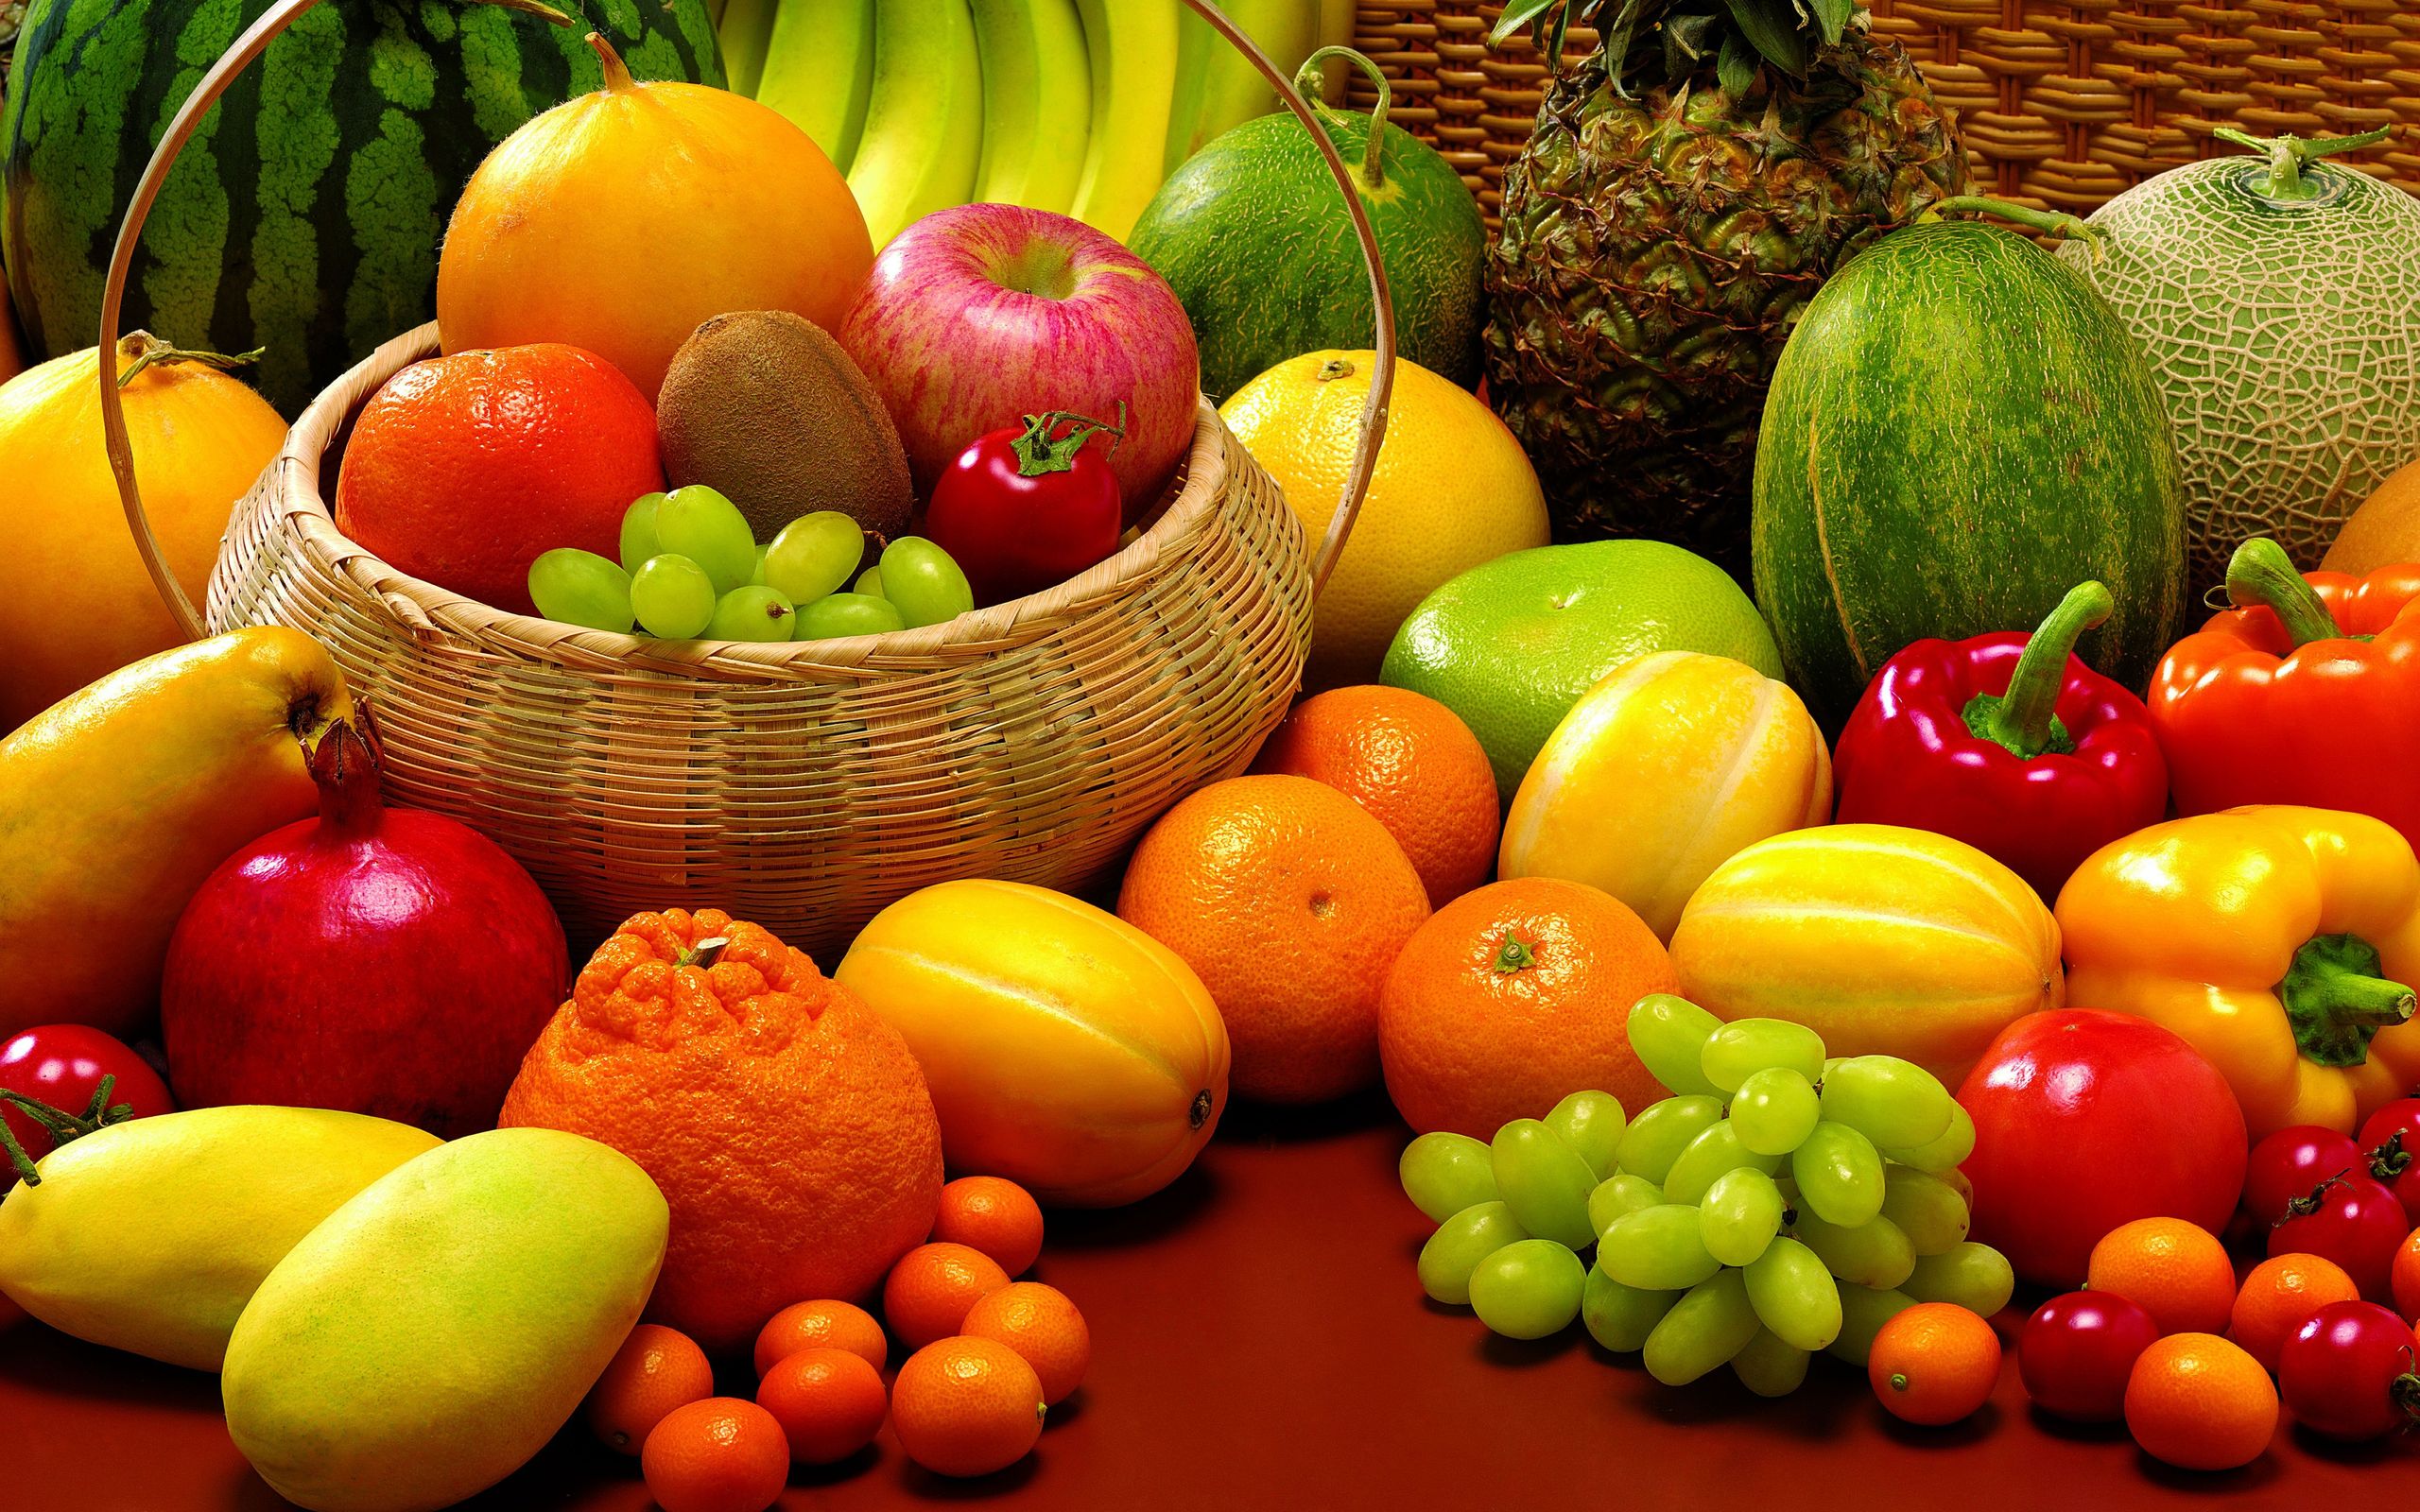 pomegranate, watermelon, fruits, grapes, banana, melon, food, fruit, kumquat, pineapple